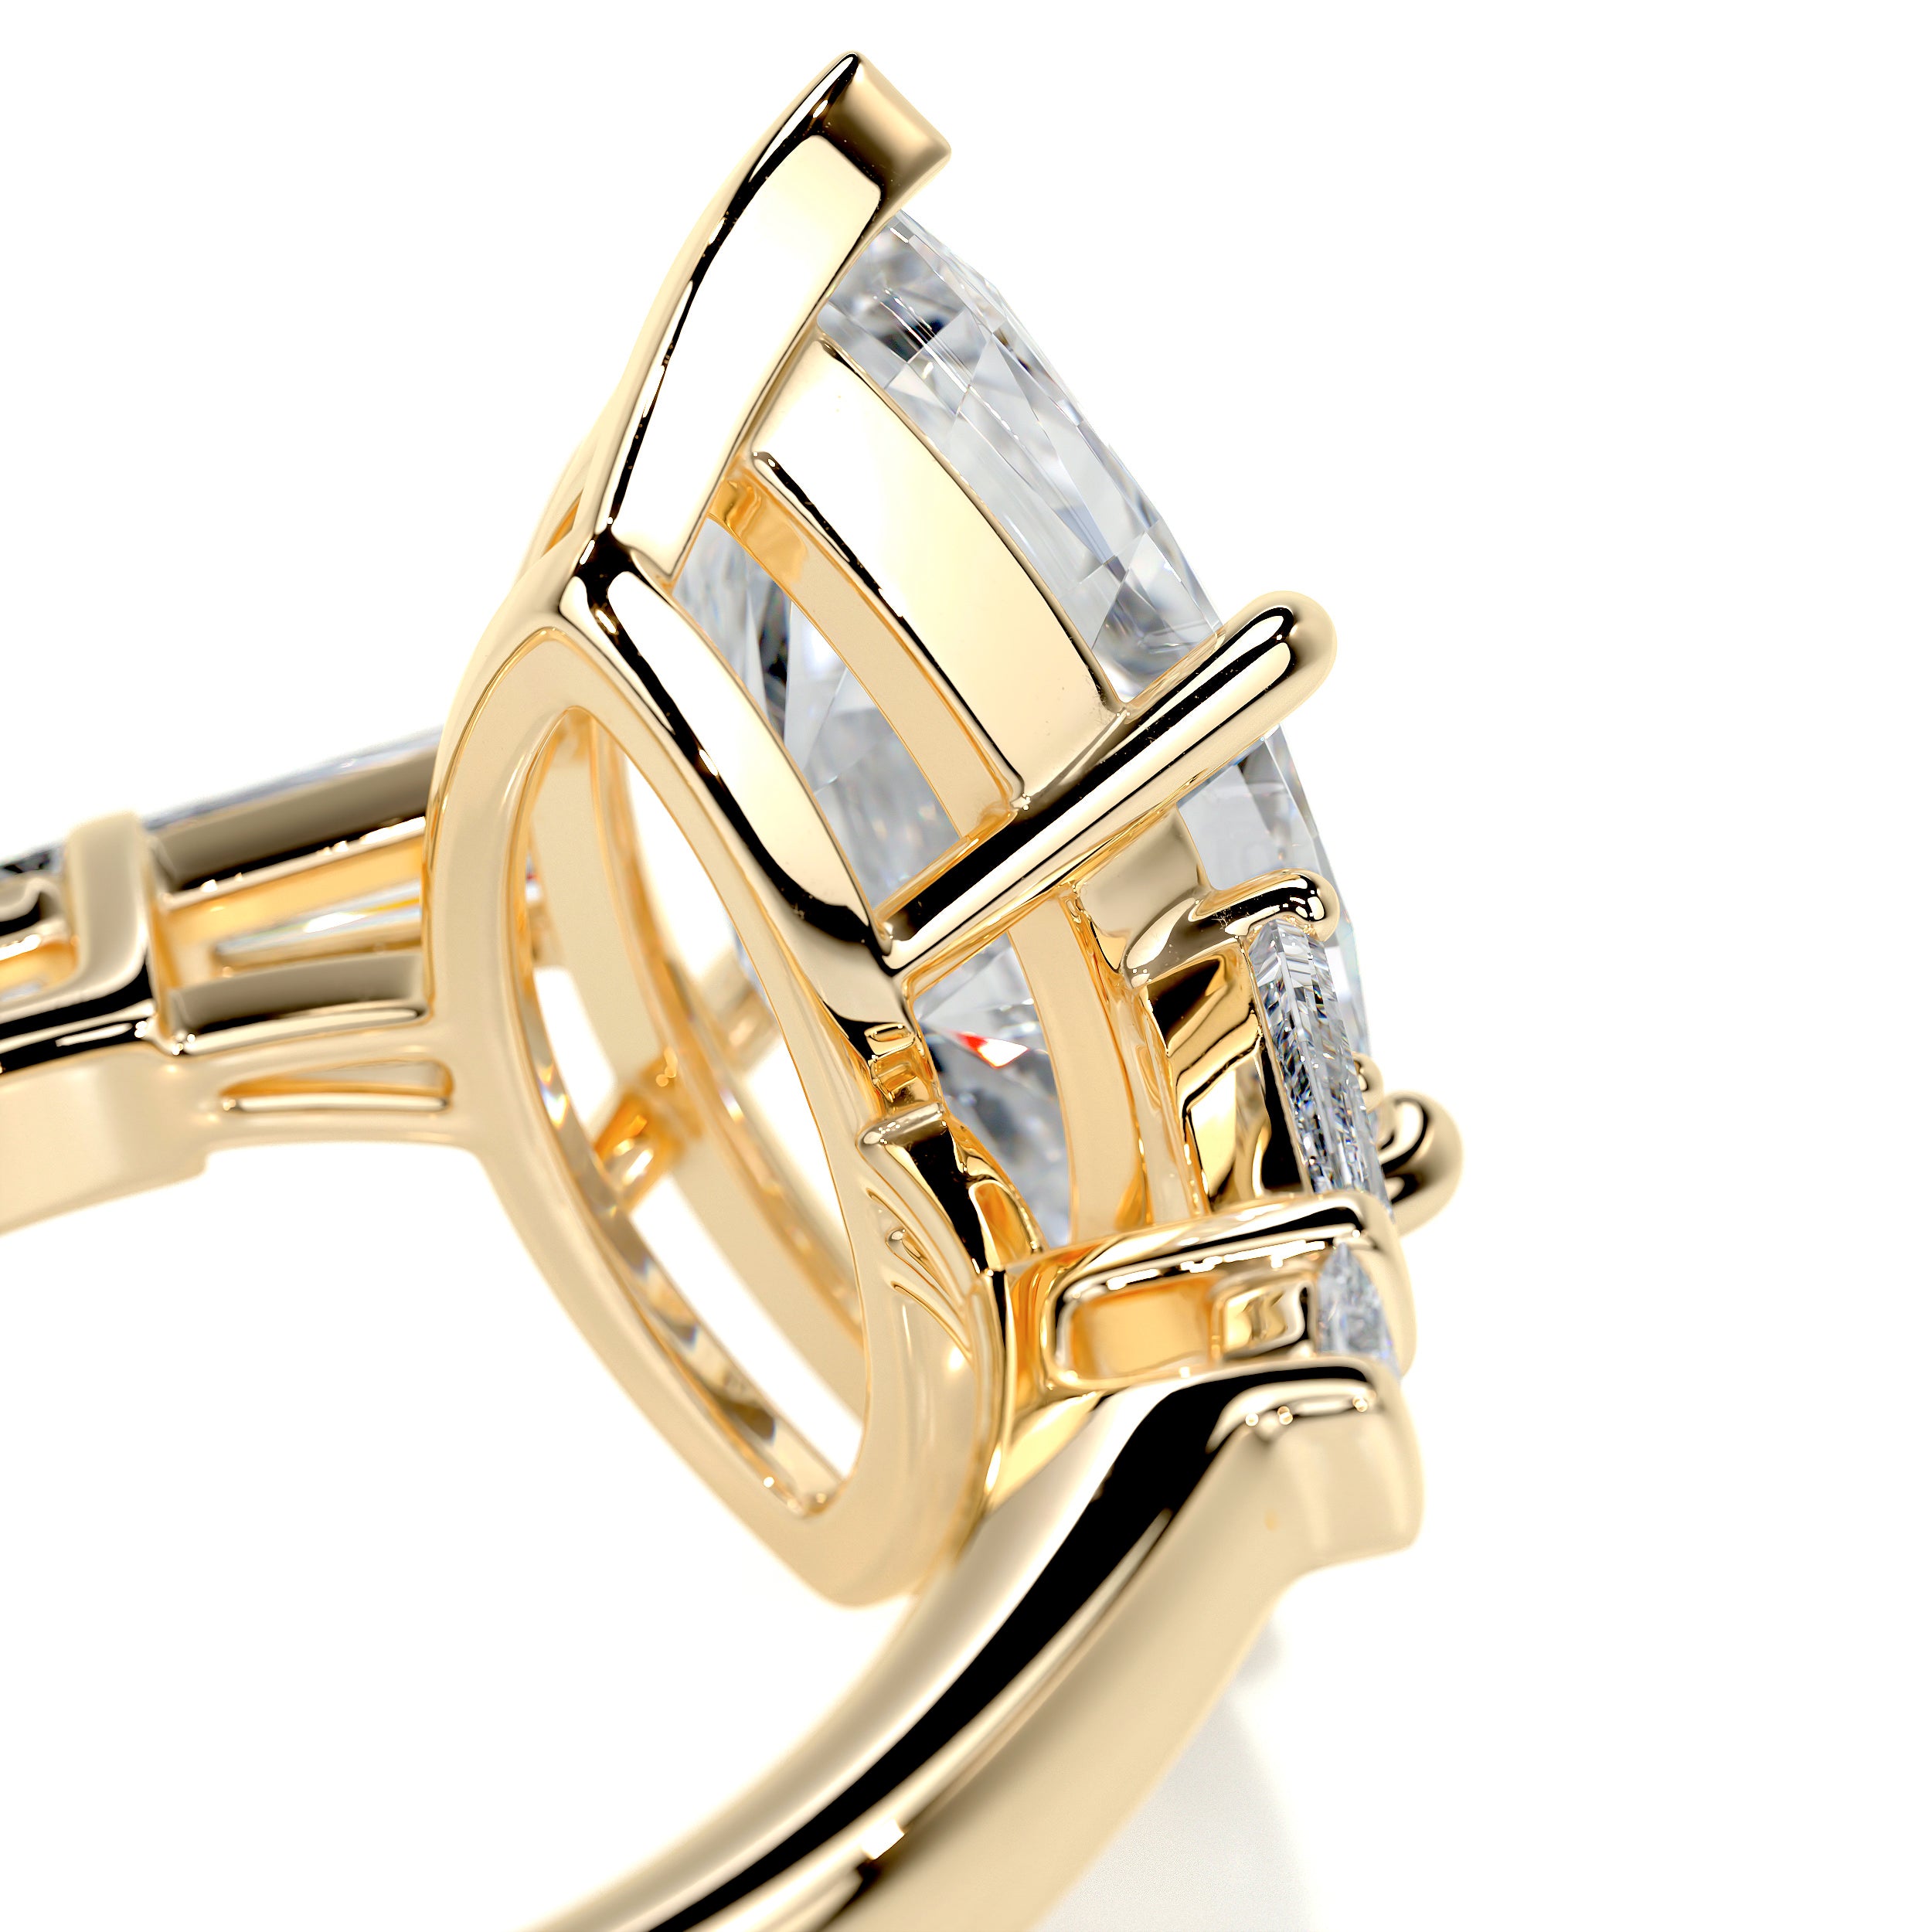 Tessa Diamond Engagement Ring   (5.3 Carat) -18K Yellow Gold